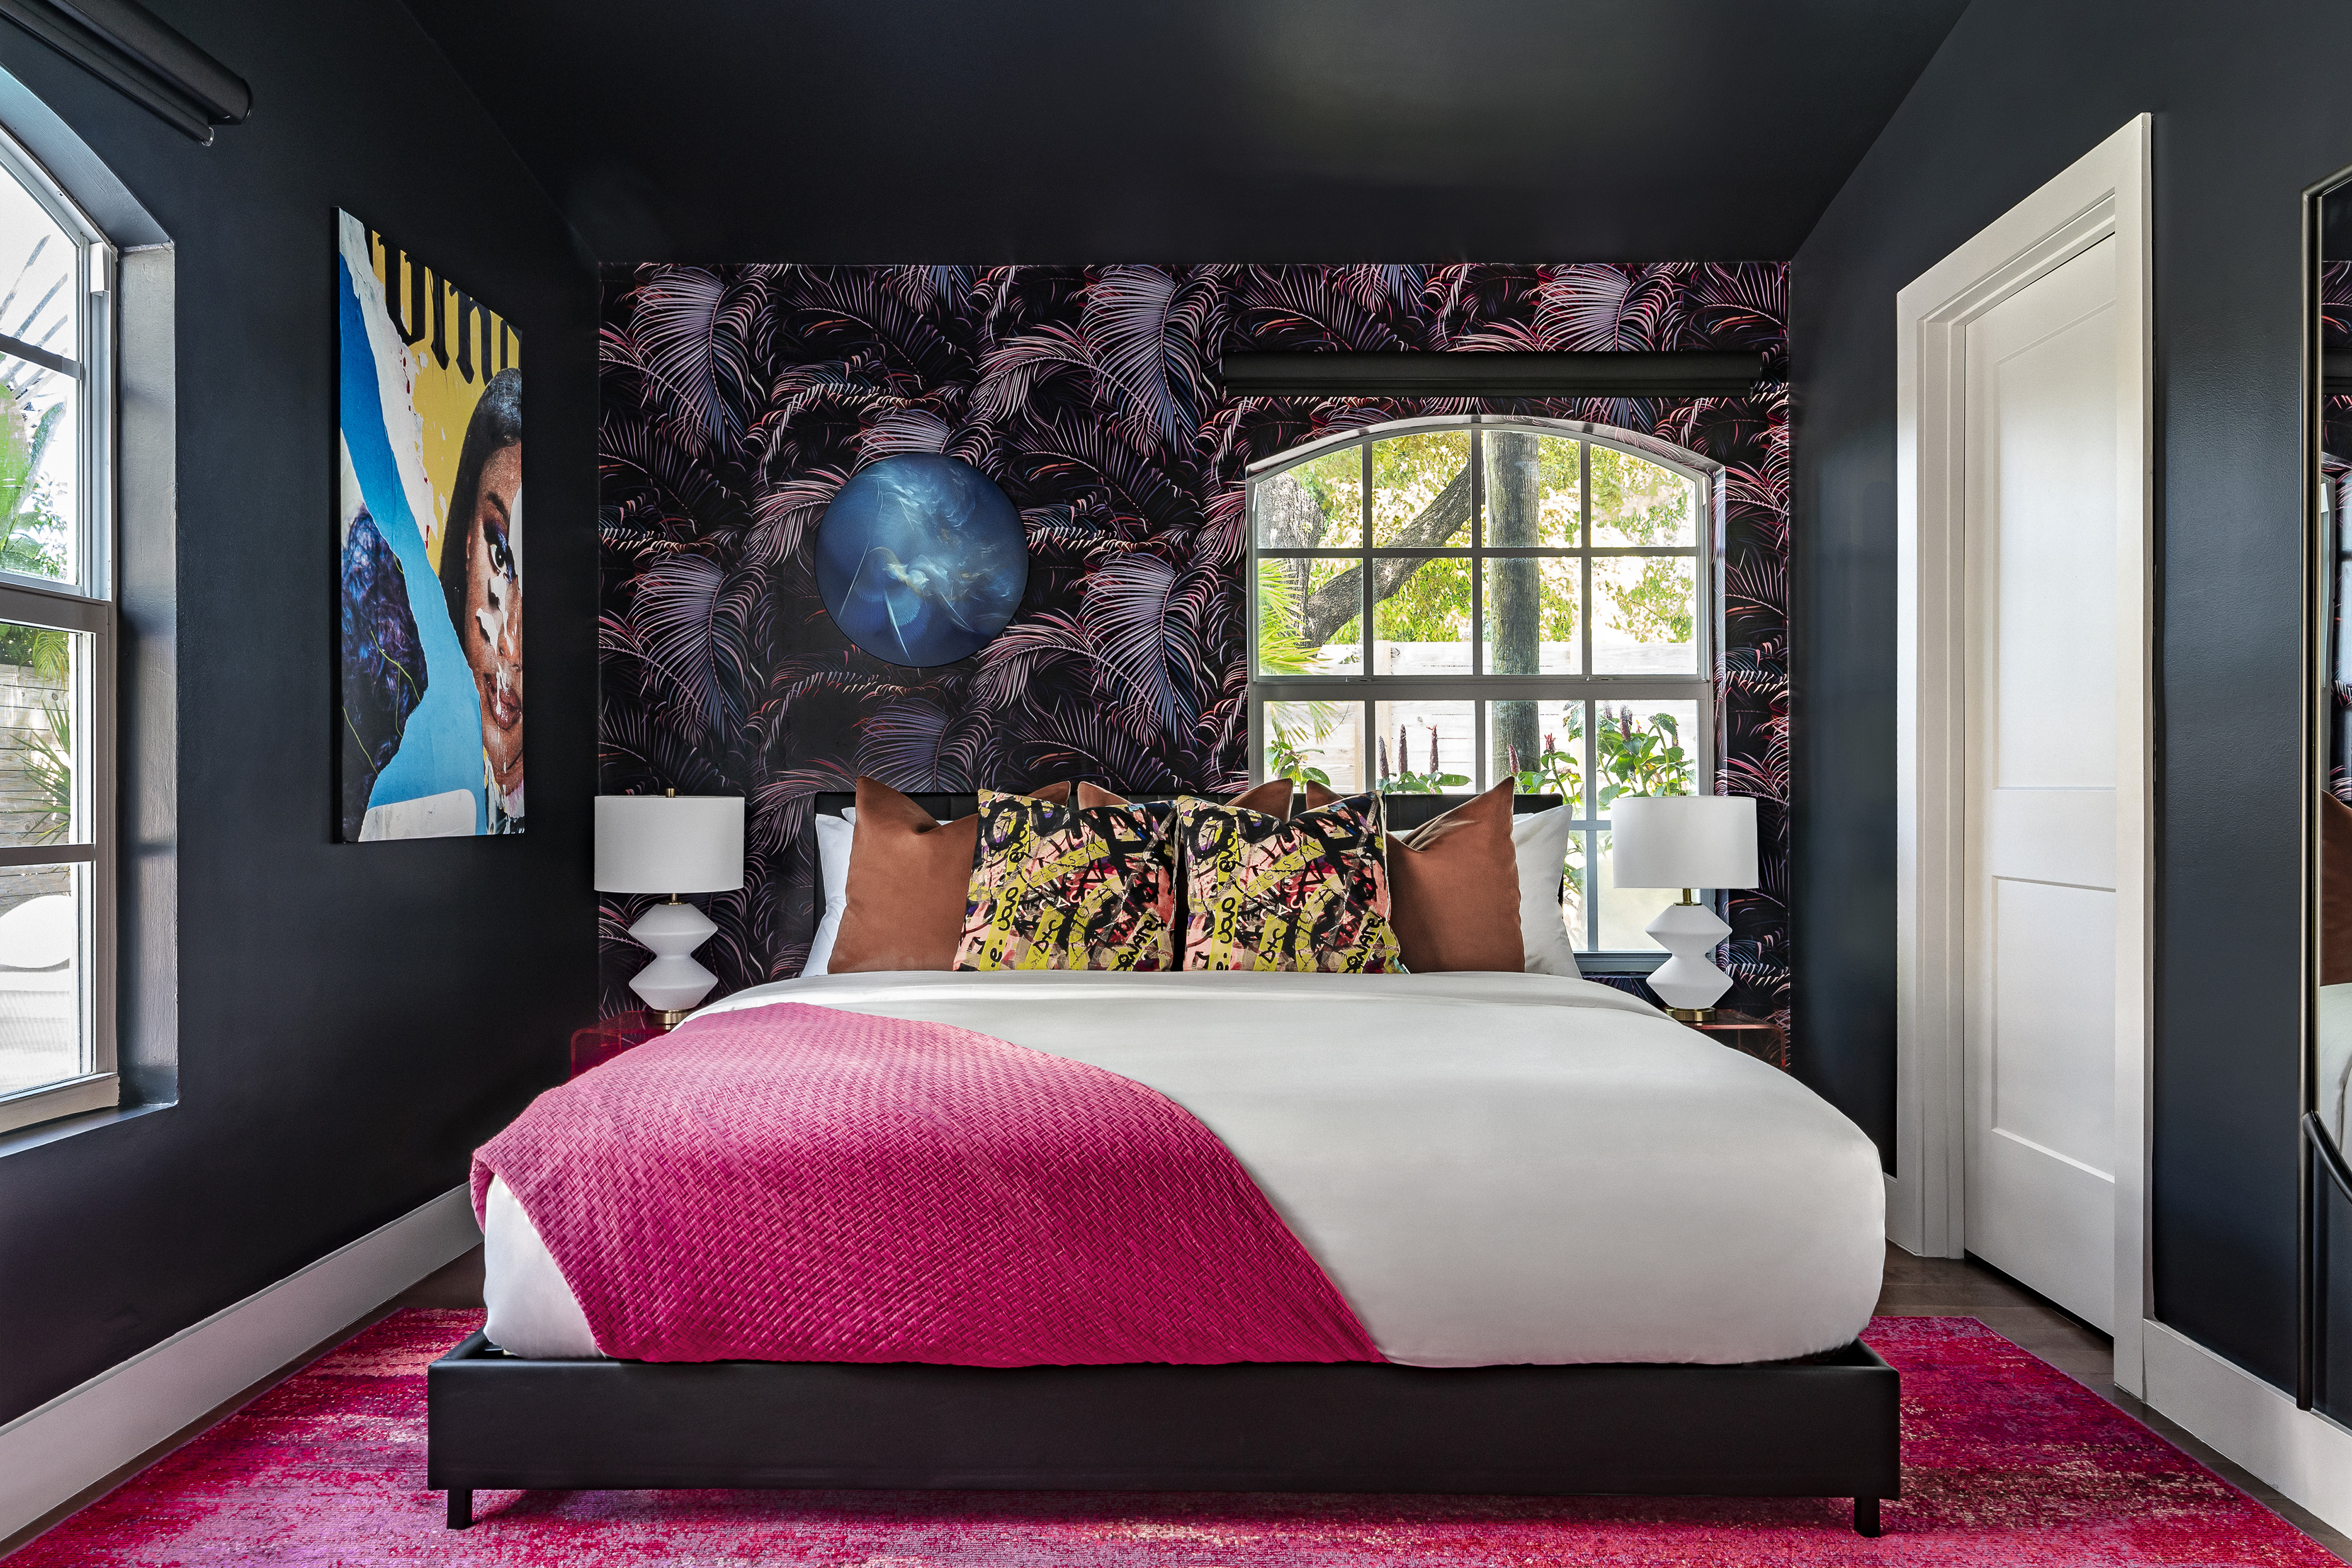 La La Land bedroom with pink rug and dark accent walls